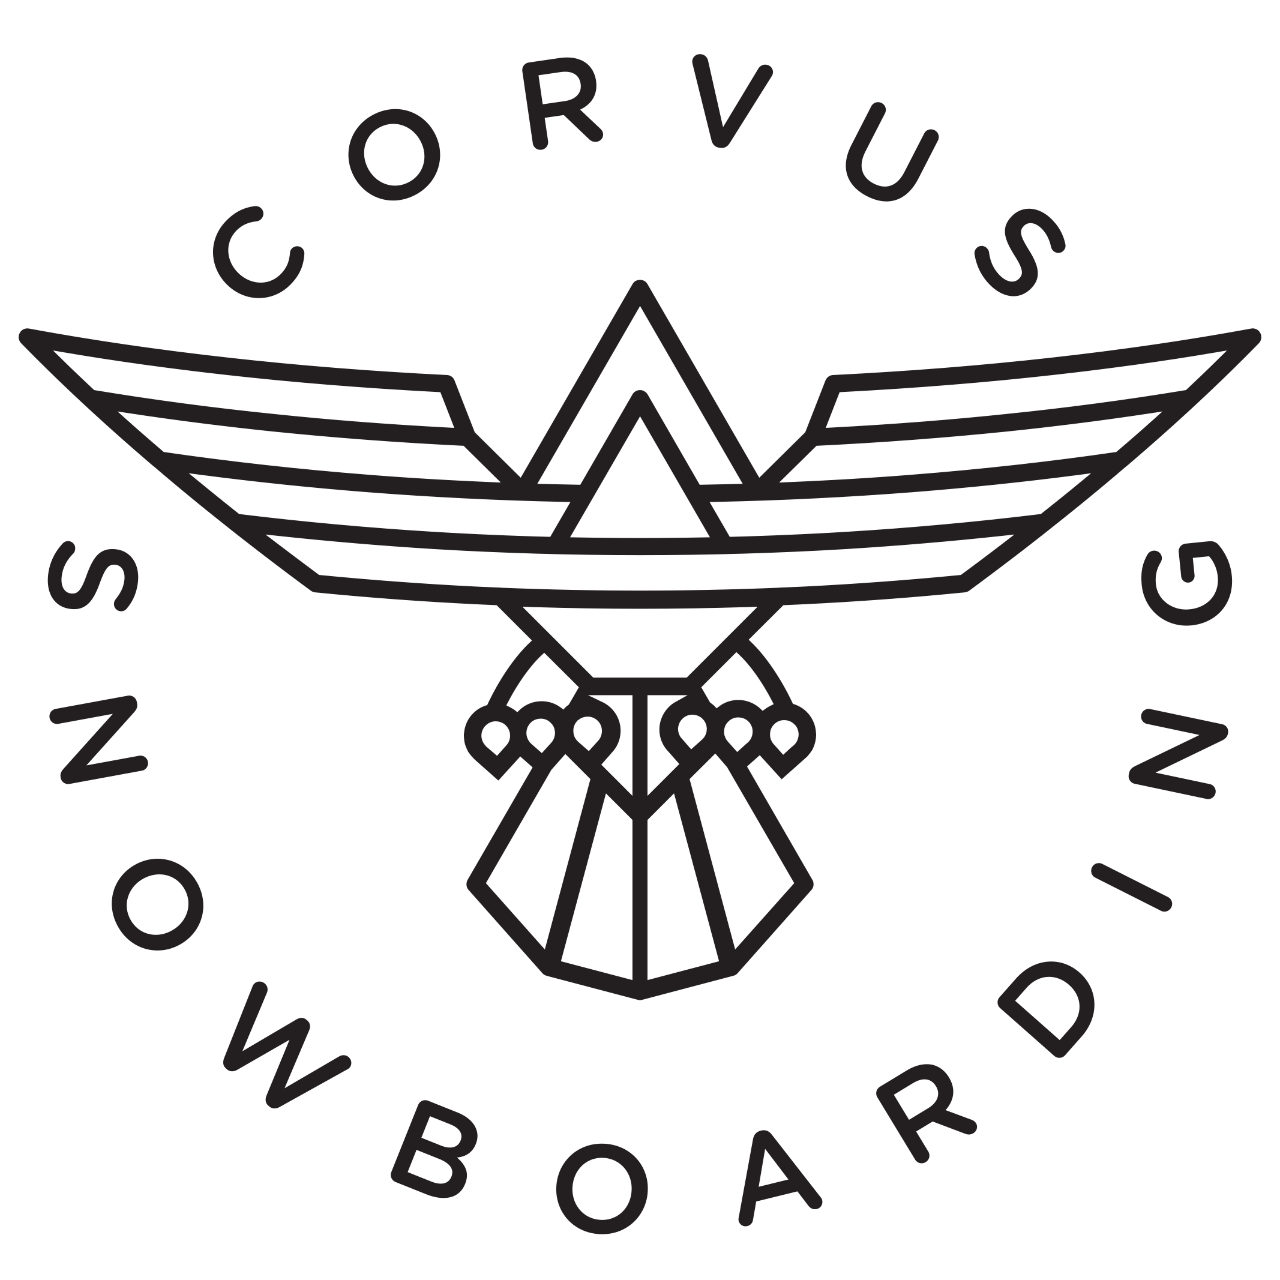 Corvus Snowboarding  -  Spine and Dine